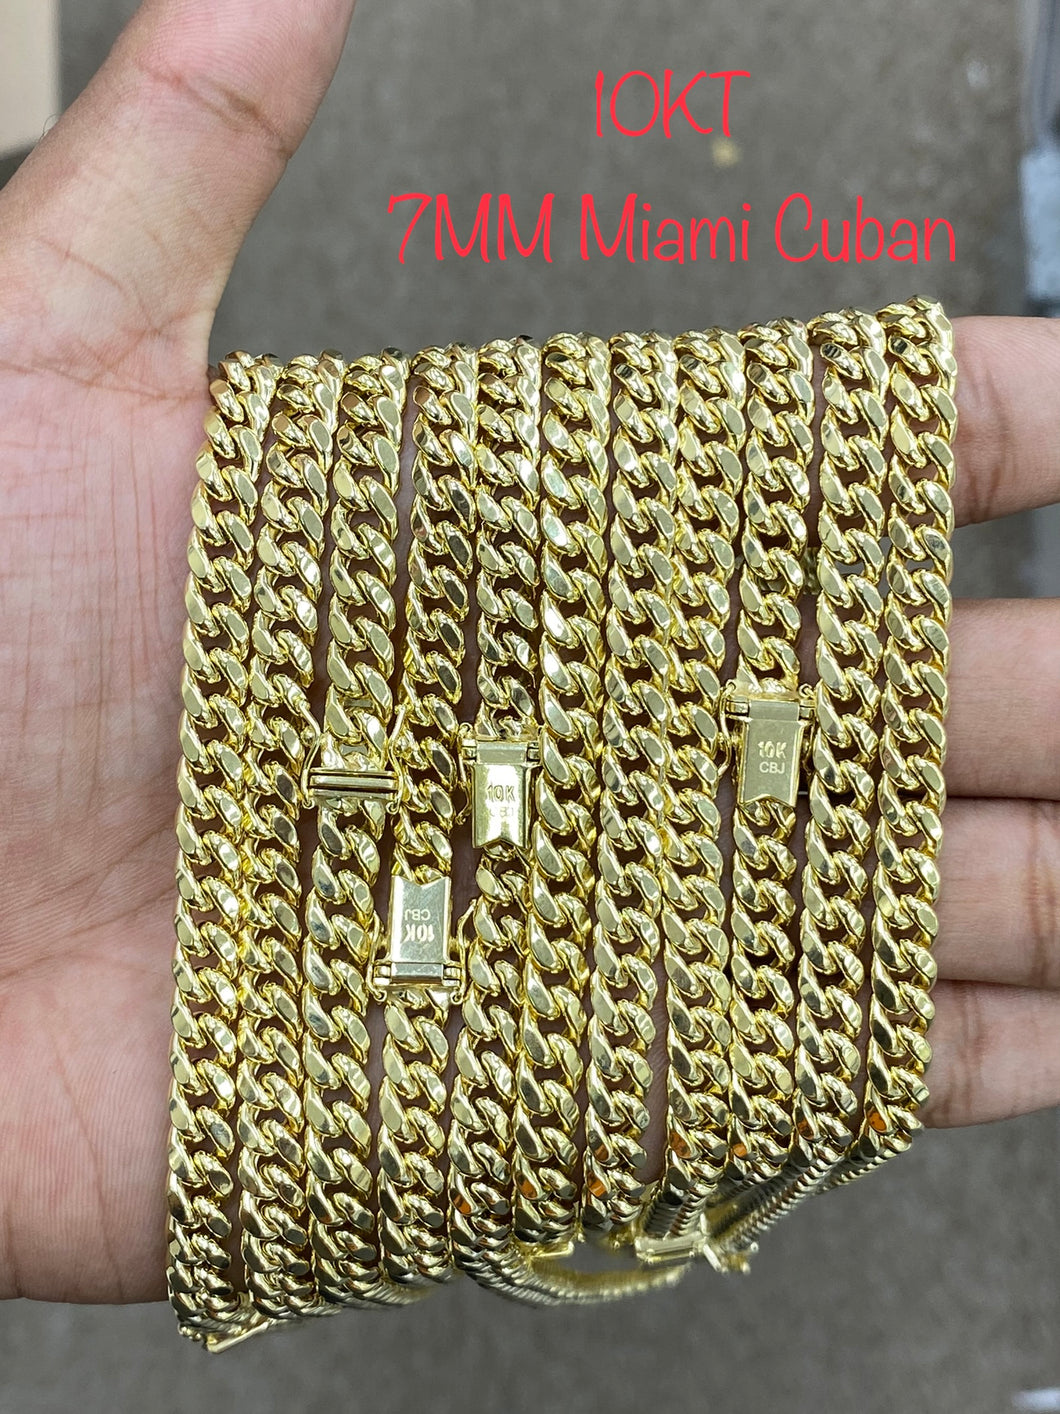 10KT 7MM Miami Cuban Necklace/Bracelet, Diamond Cut 18”-24”